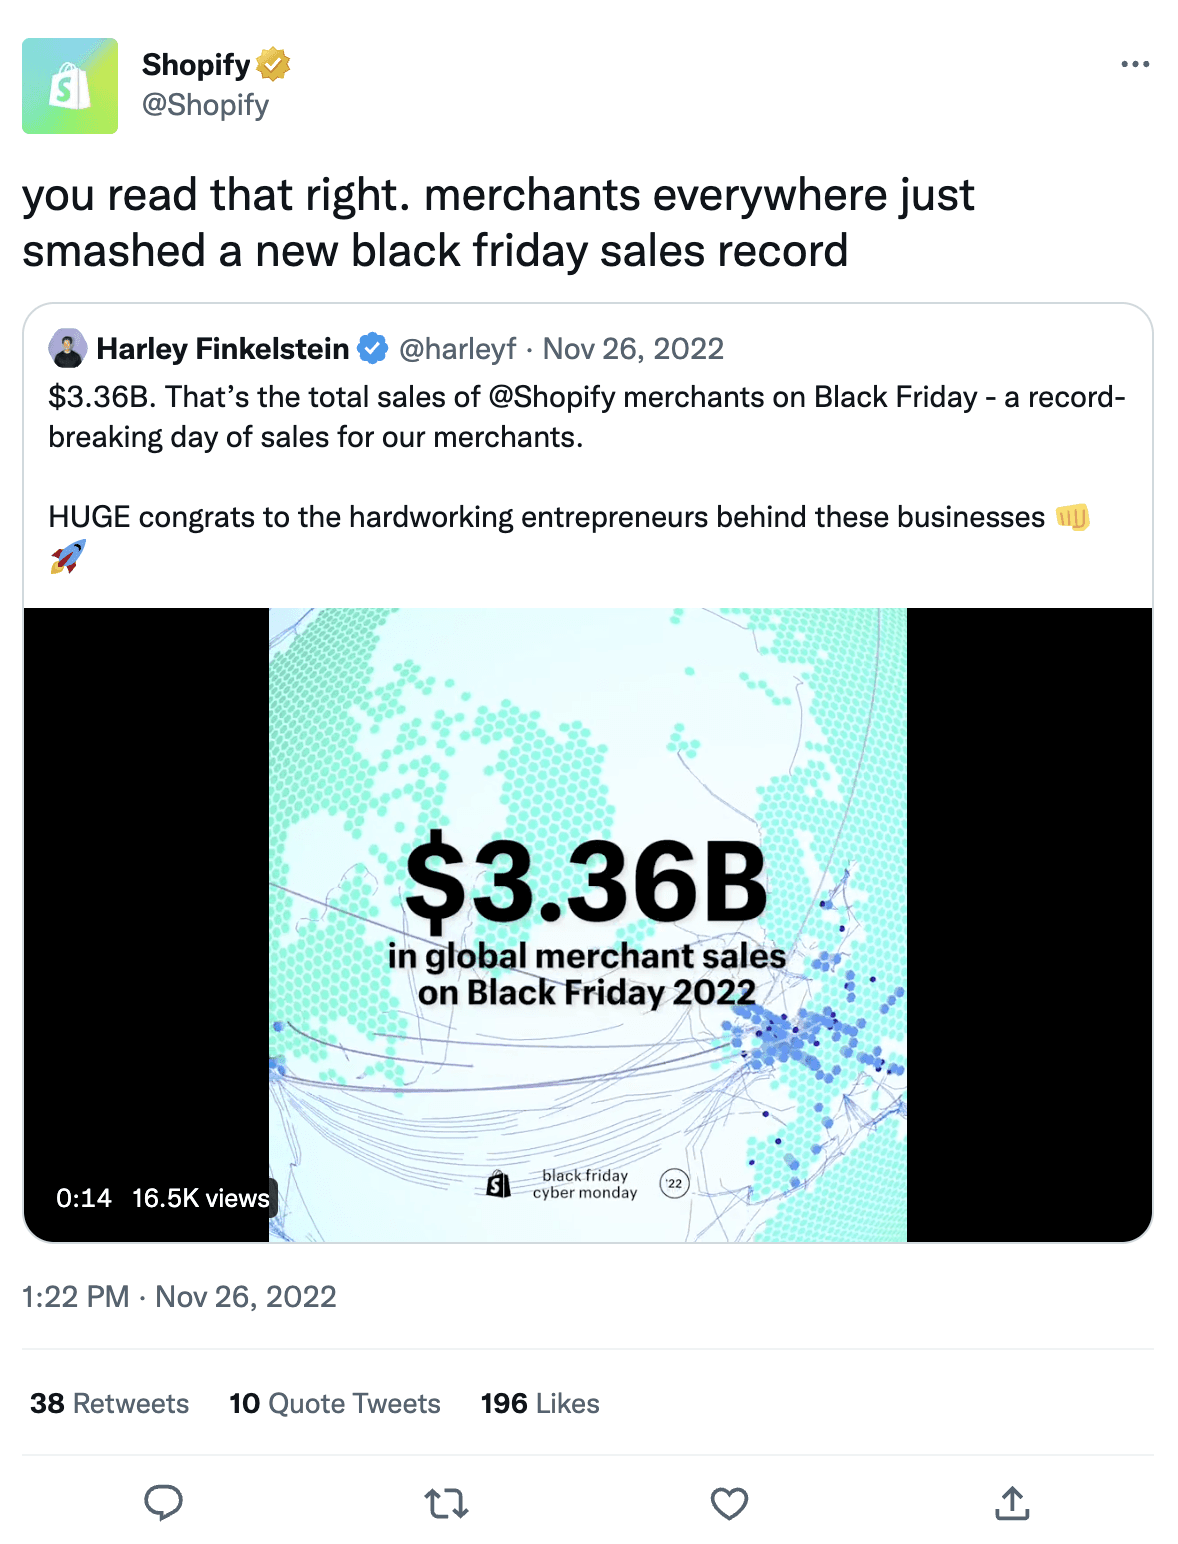 Shopify tweet regarding black Friday sales record